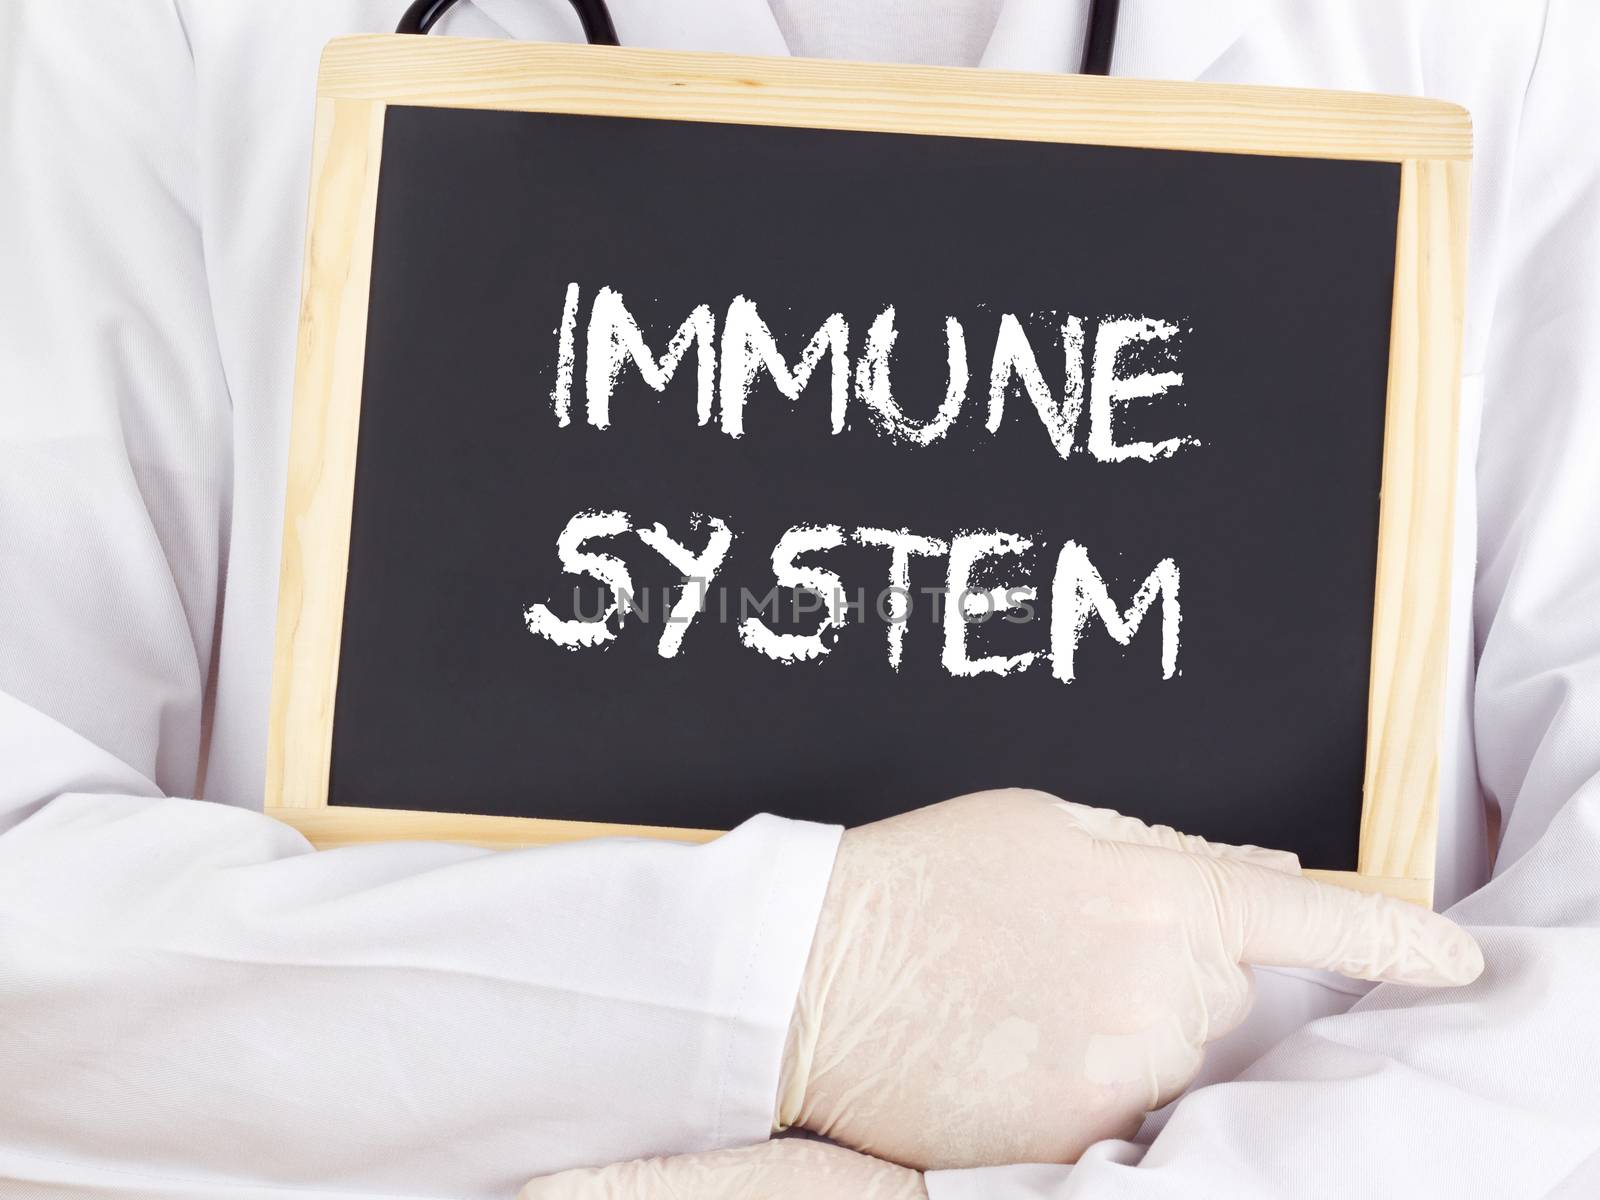 Doctor shows information on blackboard: immune system